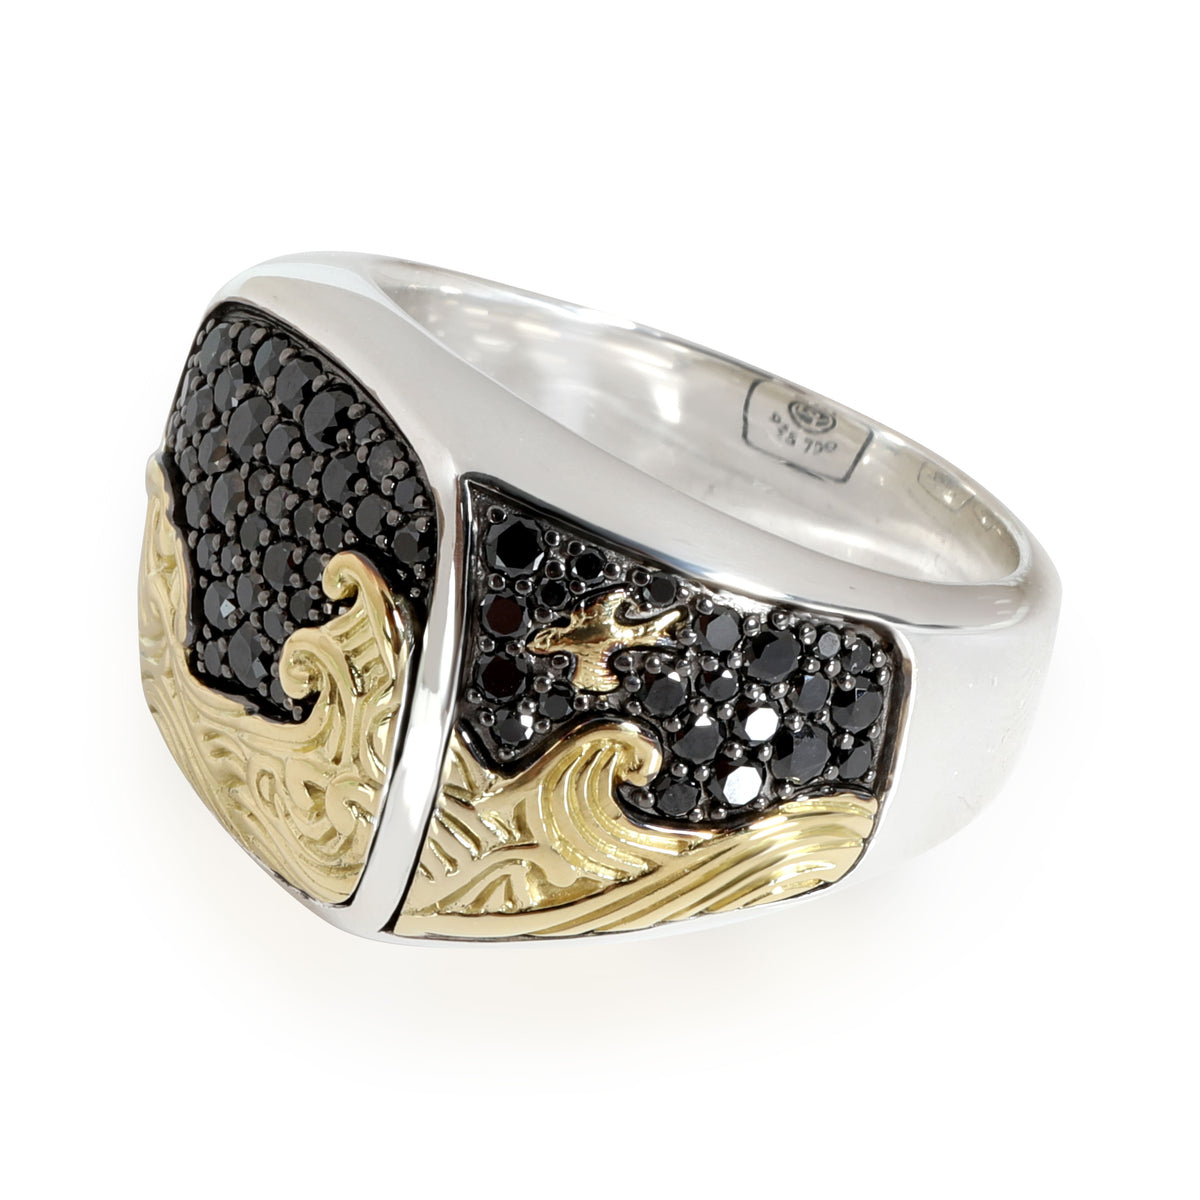 David Yurman Waves Black Diamond Ring in 18K Yellow Gold/Sterling Silver 1.67